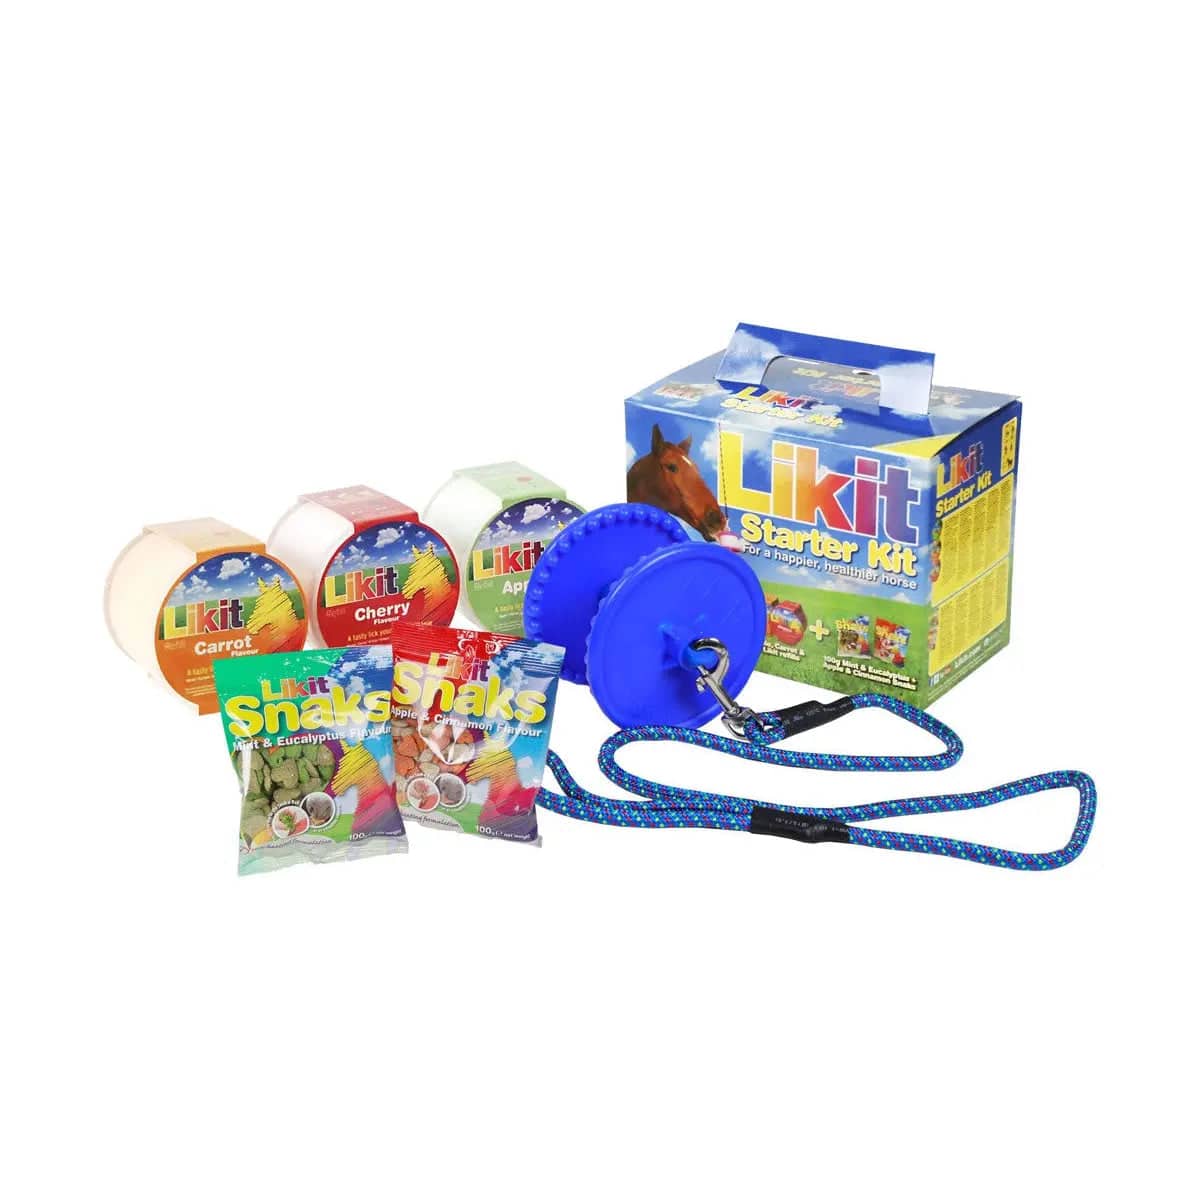 Likit Starter Kits Horse Licks Treats and Toys Blue Barnstaple Equestrian Supplies